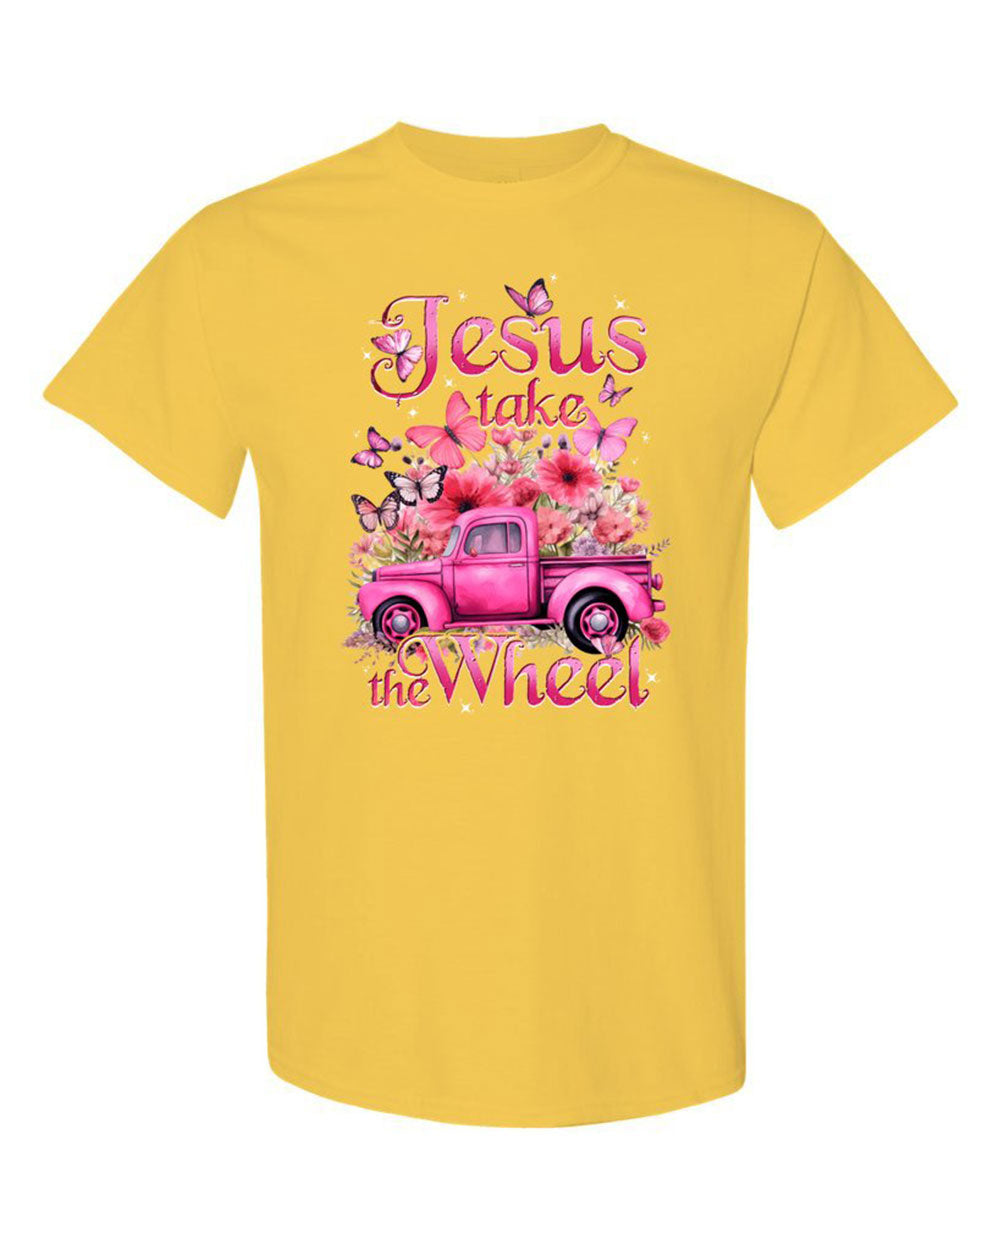 Jesus Take The Wheel Cotton Shirt - Tytd040124